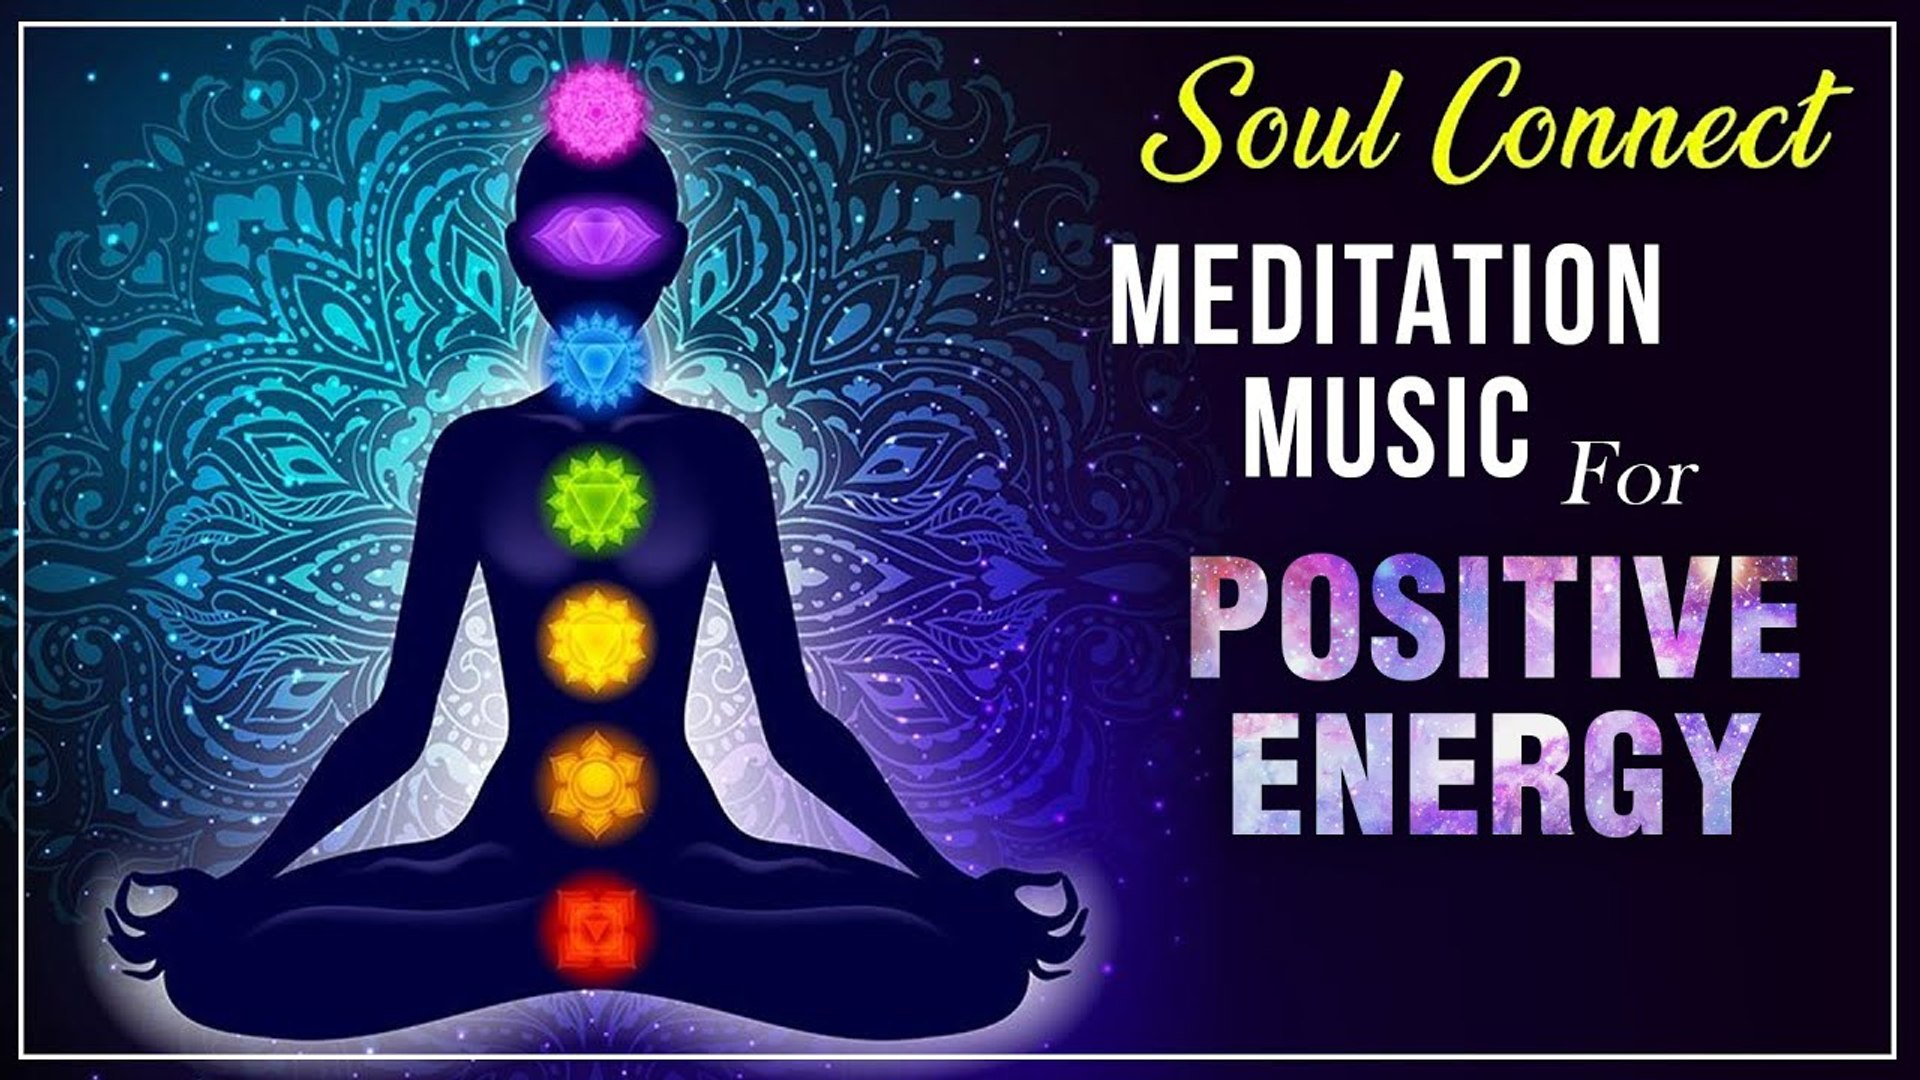 15 minute meditation music for positive energy